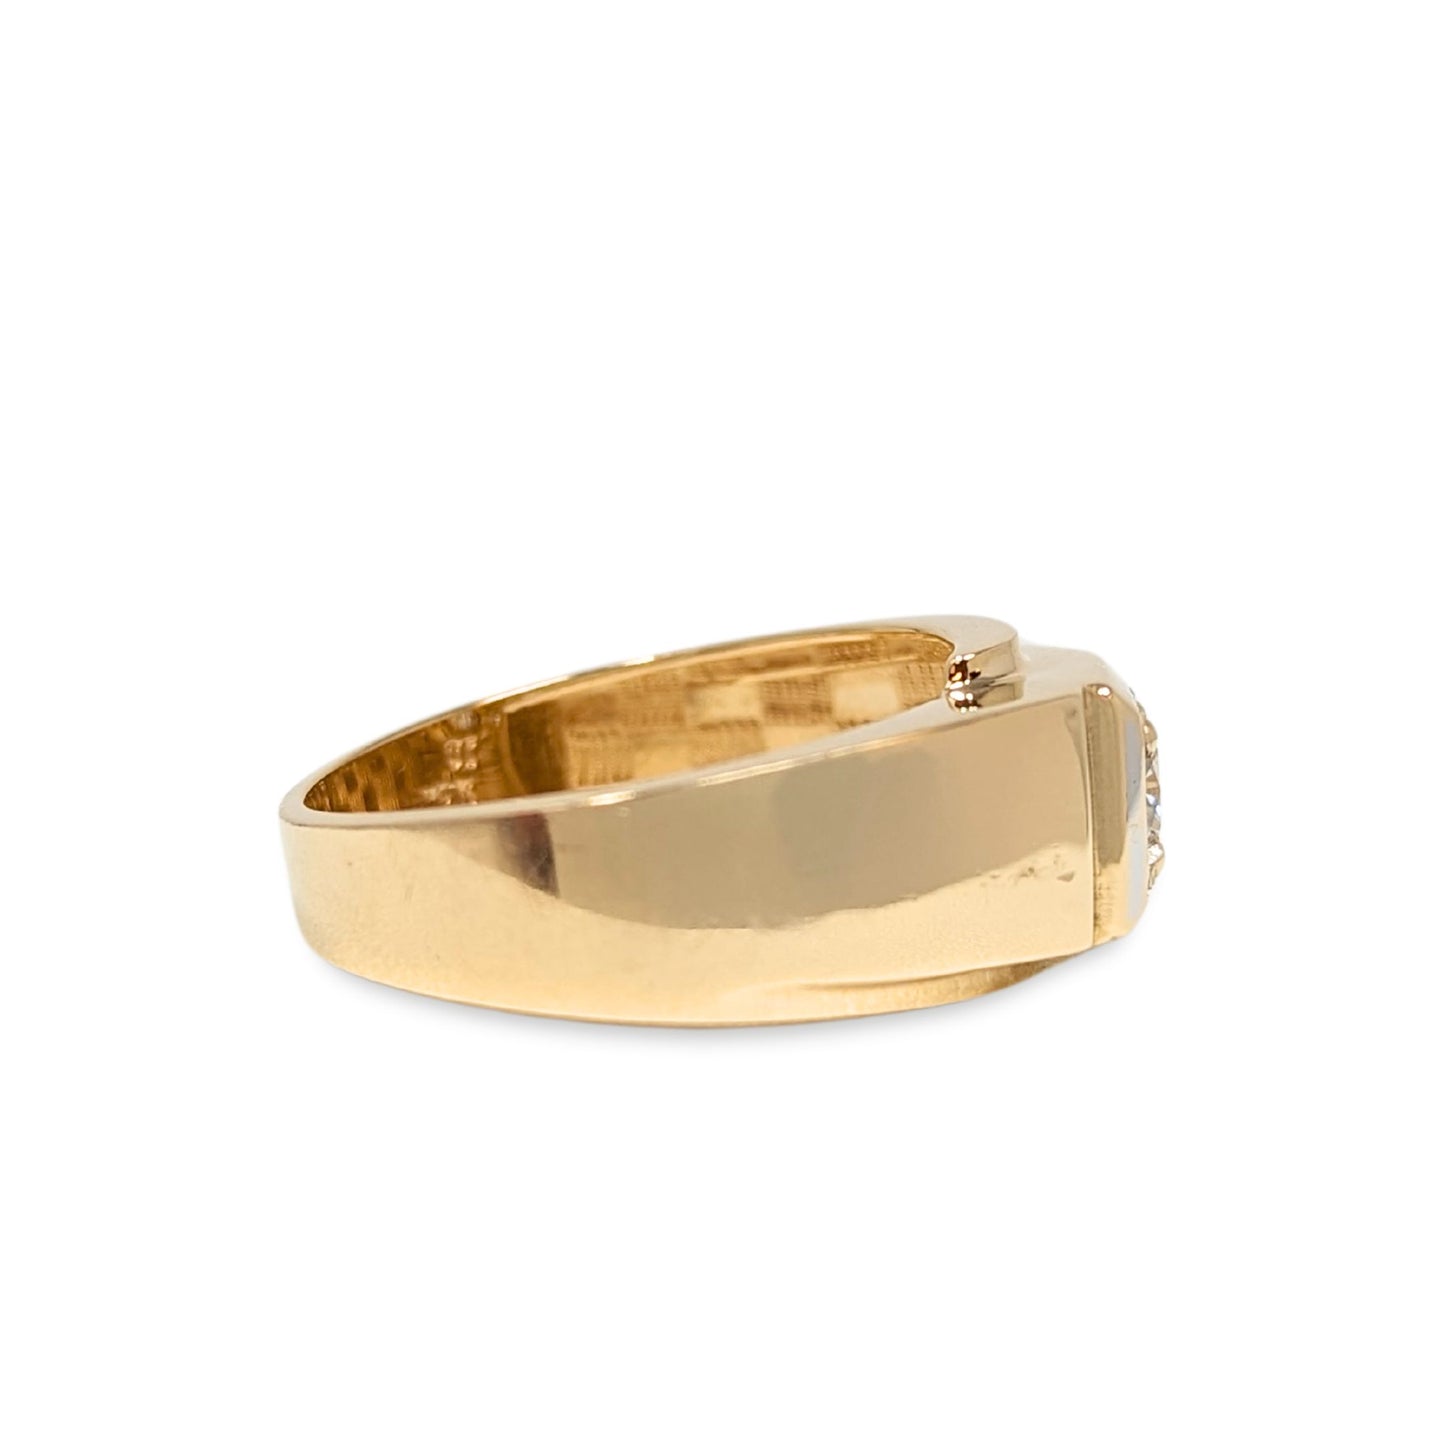 14K Gold Men's 0.5ct Diamond Ring - Size 9.5